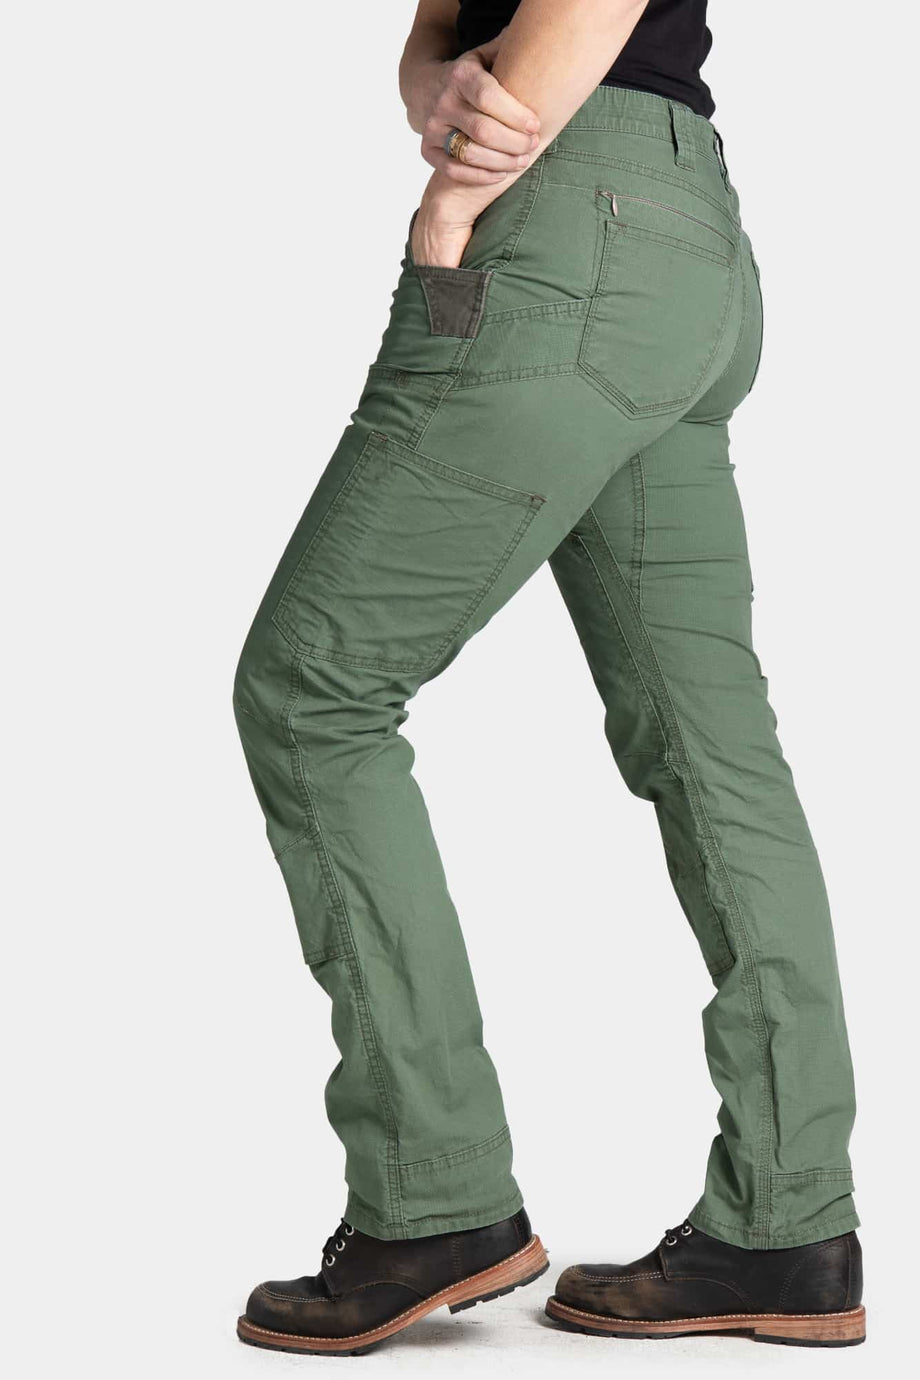 – Lichen Ripstop Britt Light X Green Workwear in Dovetail Ultra